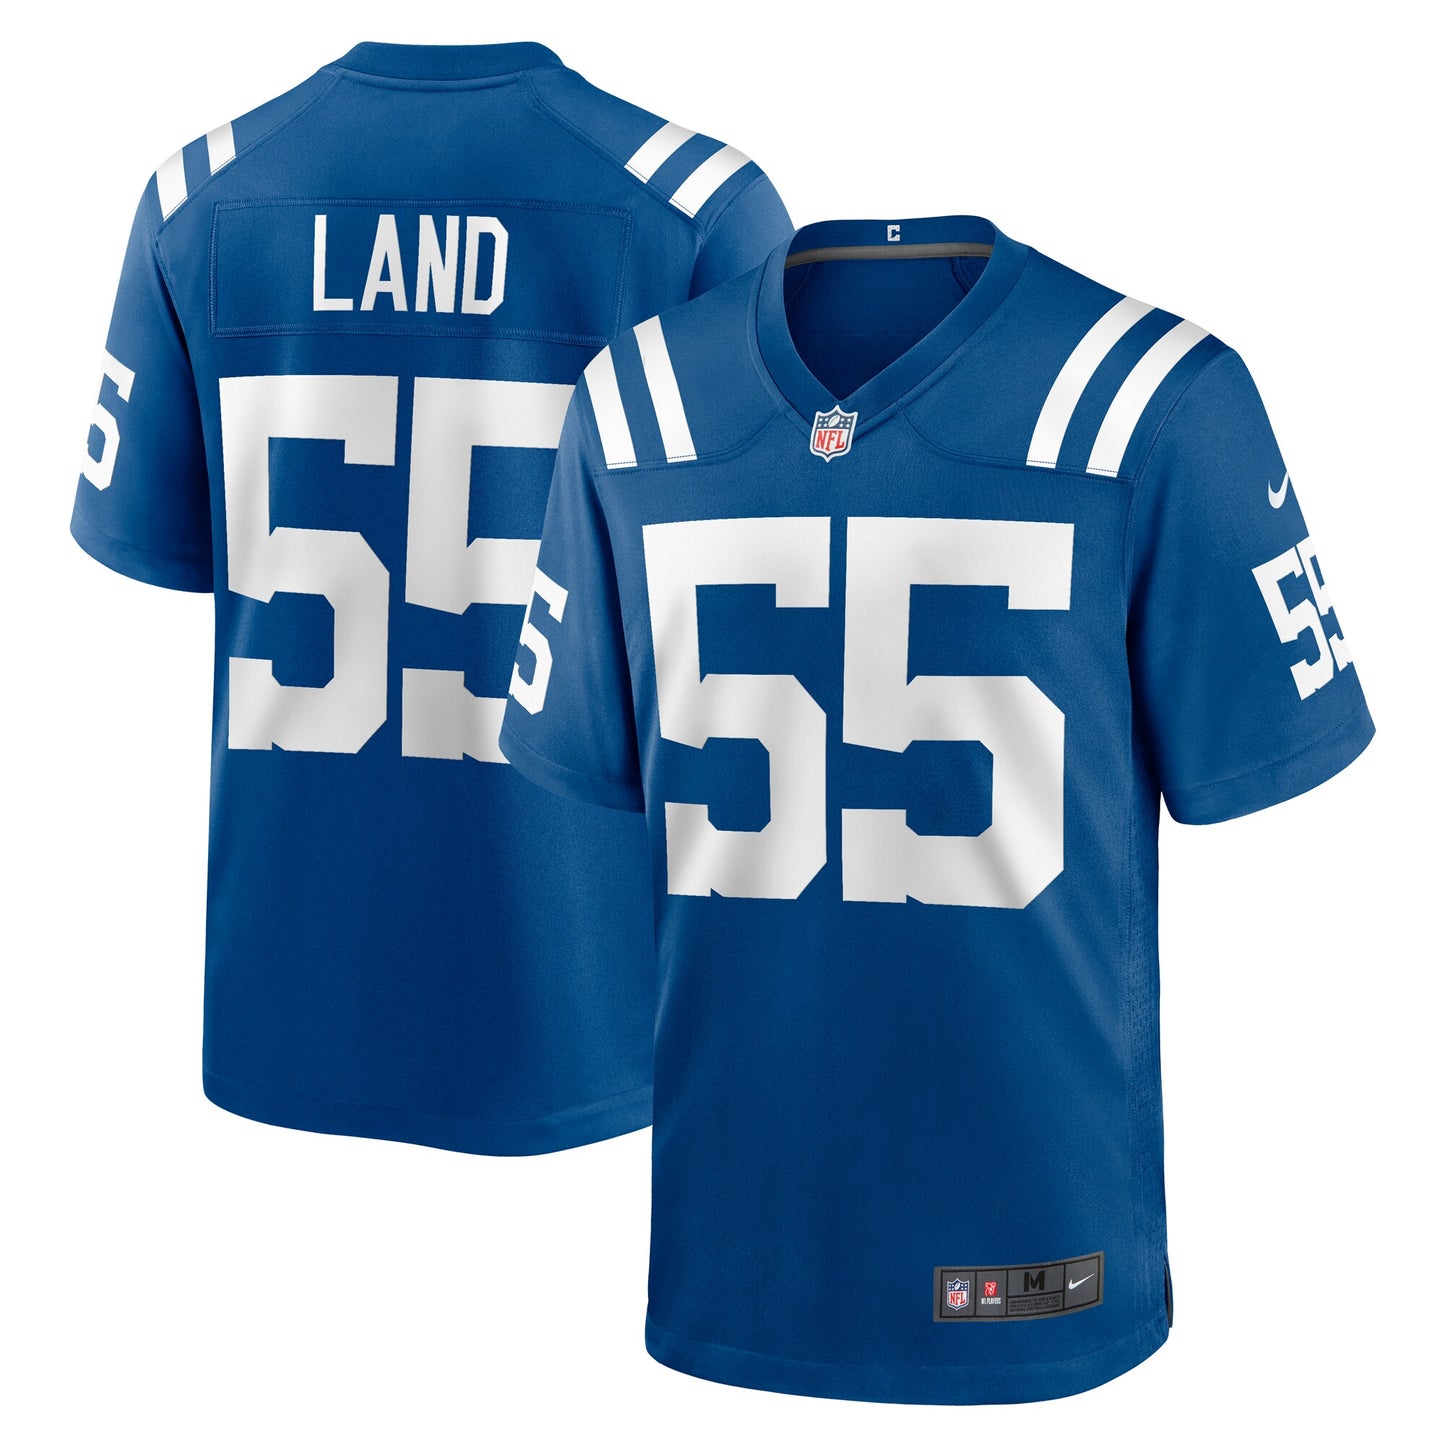 Isaiah Land Indianapolis Colts Nike Team Game Jersey - Royal